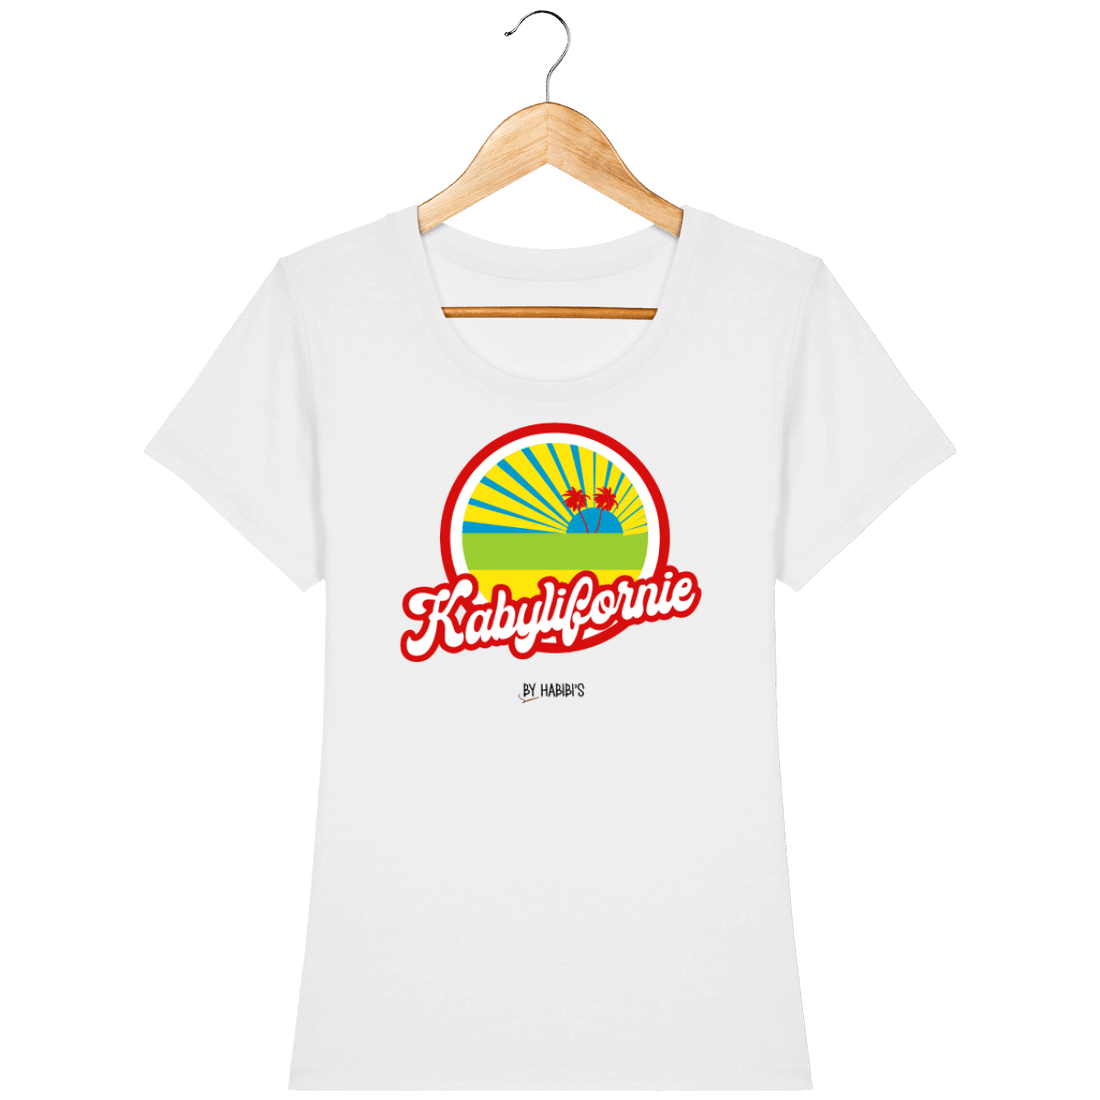 Femme>Tee-shirts - T-Shirt Femme <br> Kabylifornie